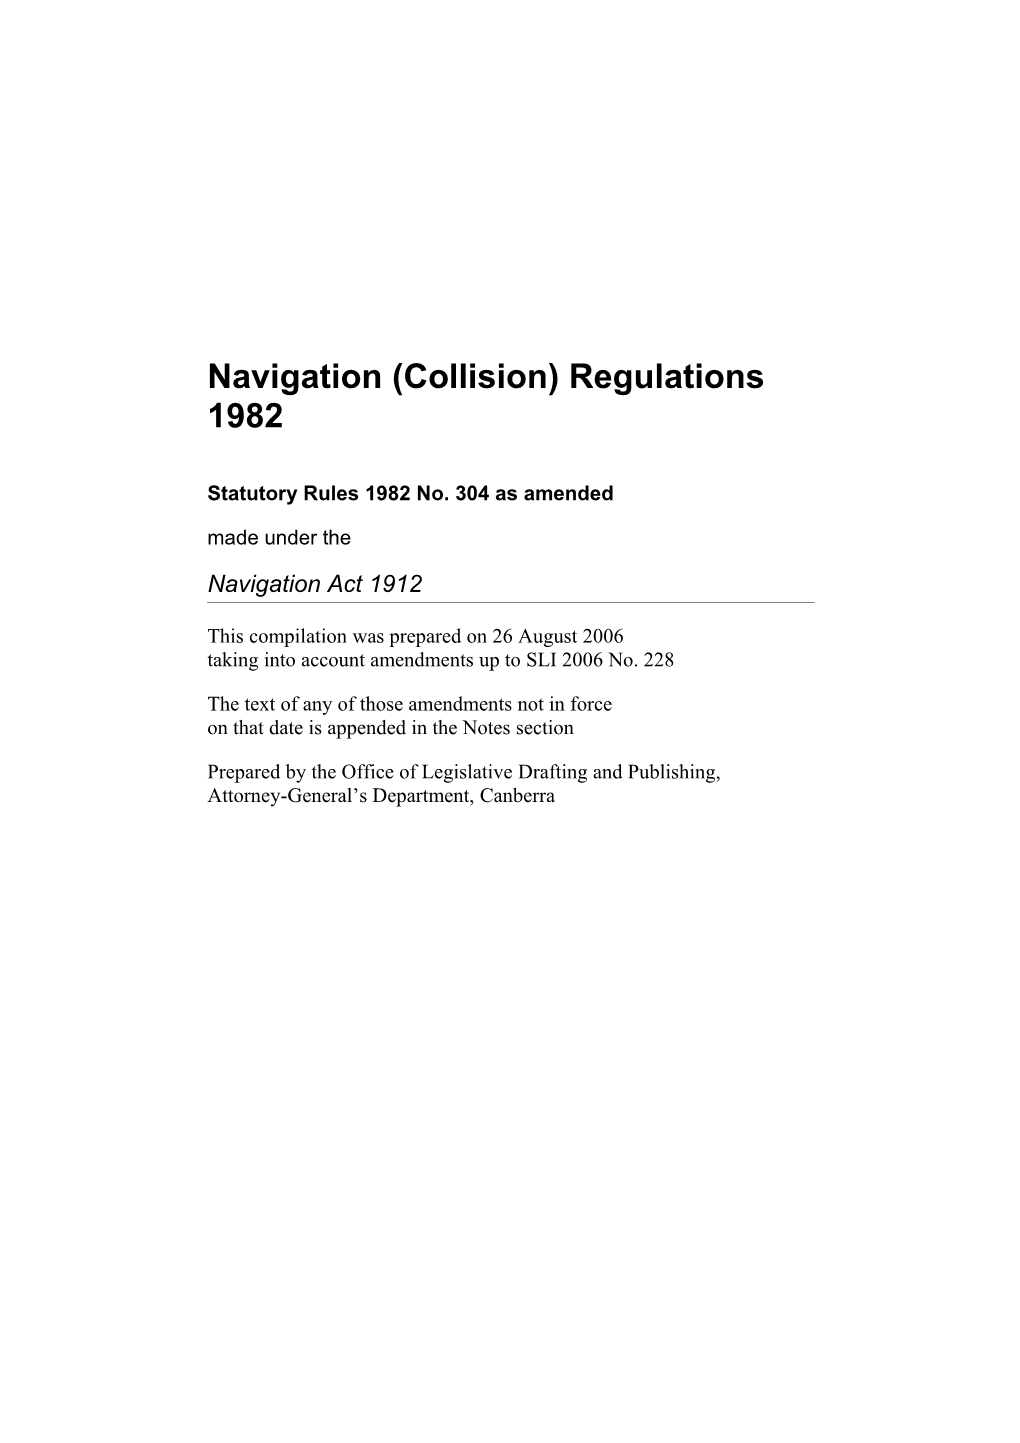 Navigation (Collision) Regulations 1982